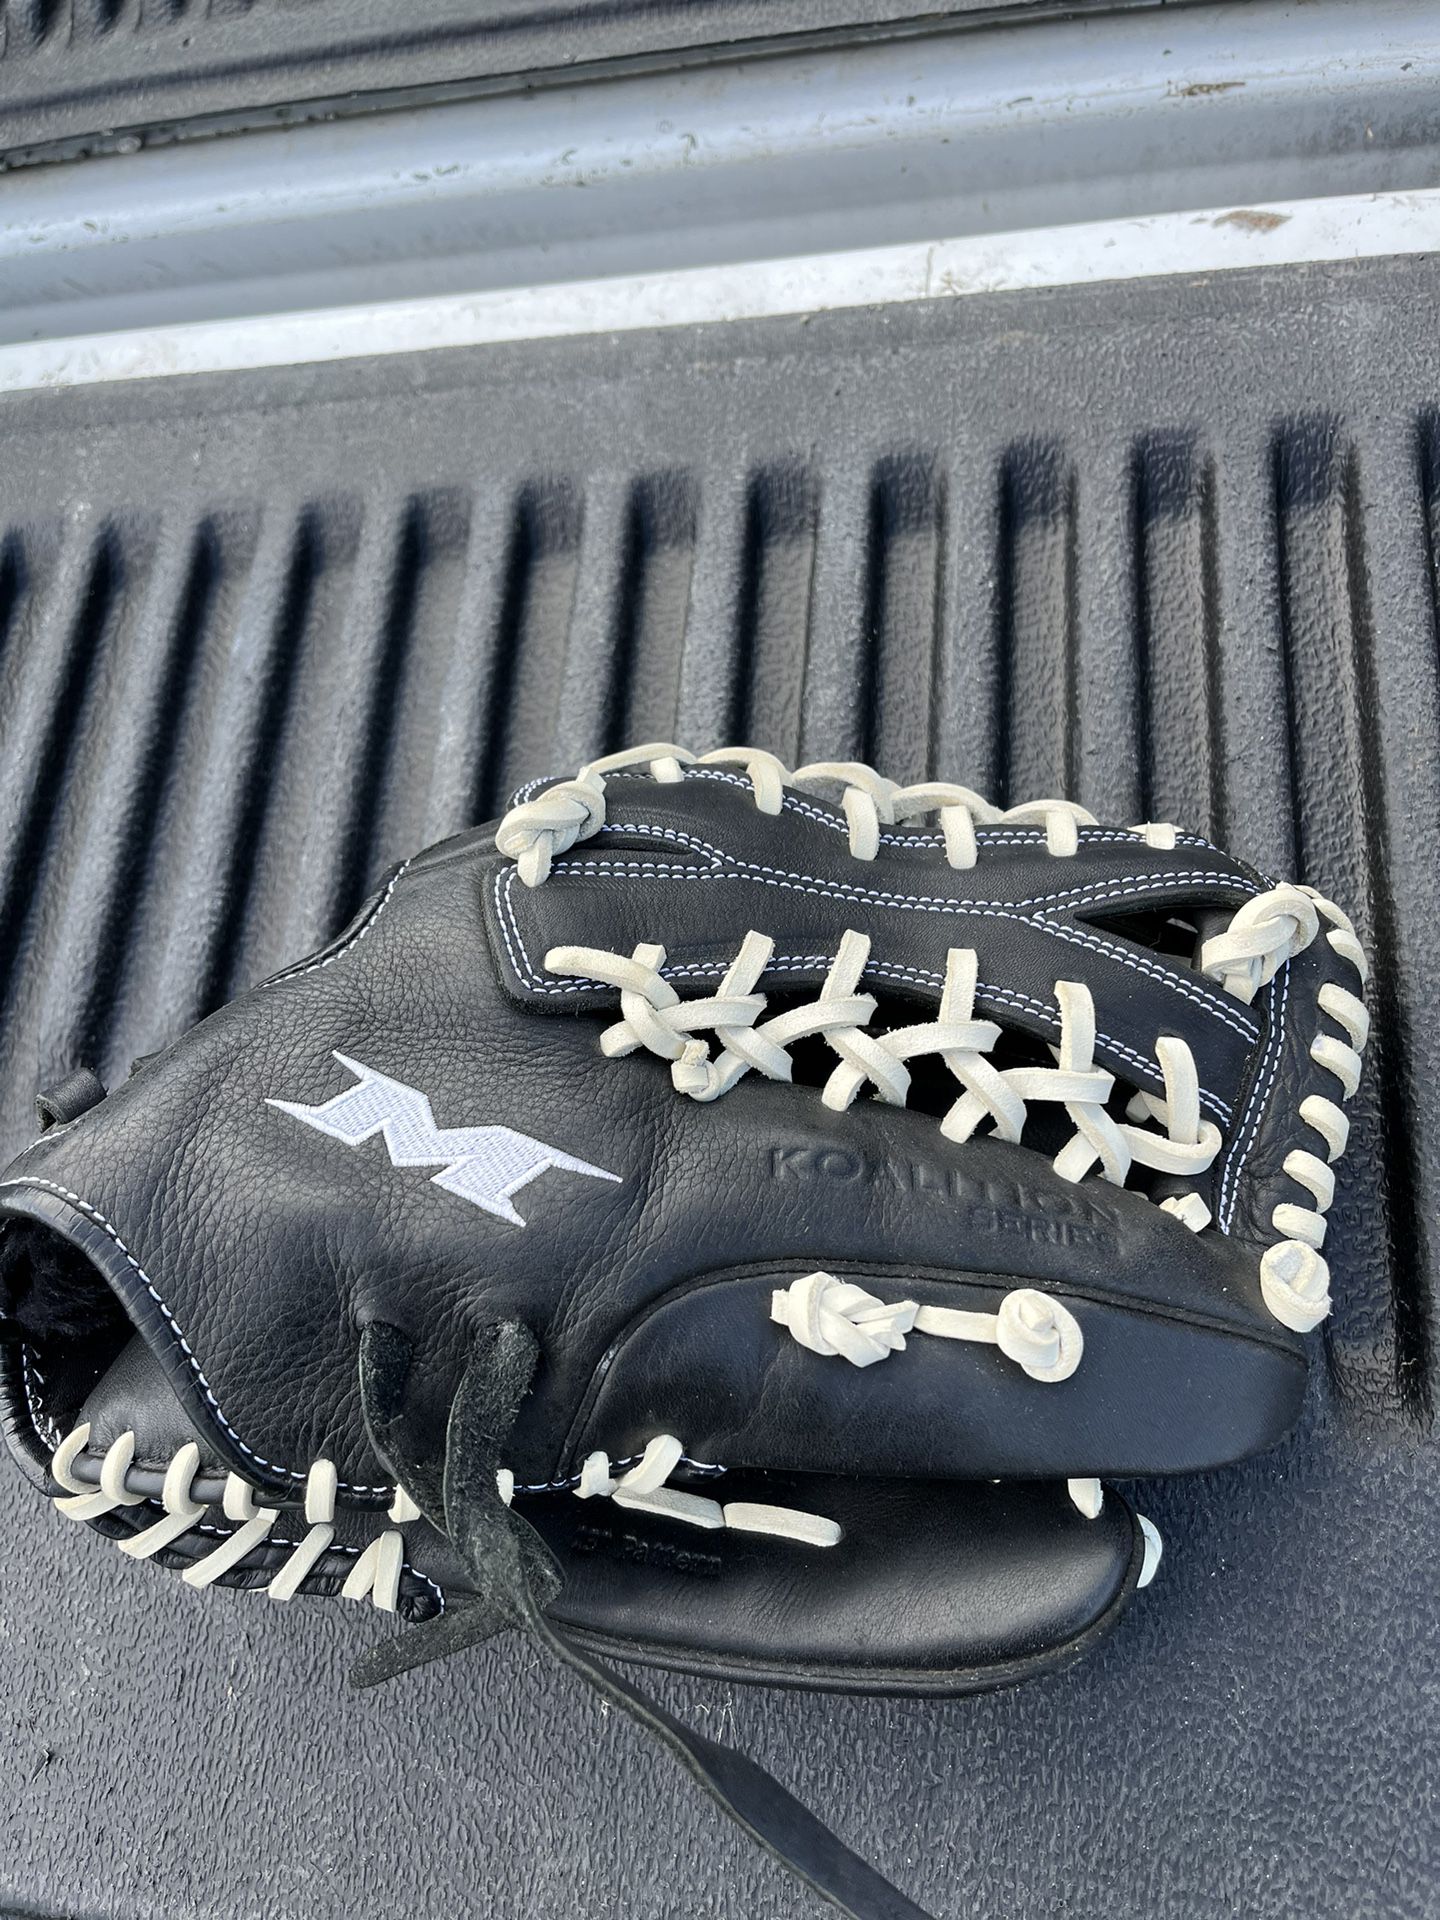 Miken Softball Glove 13 Inch